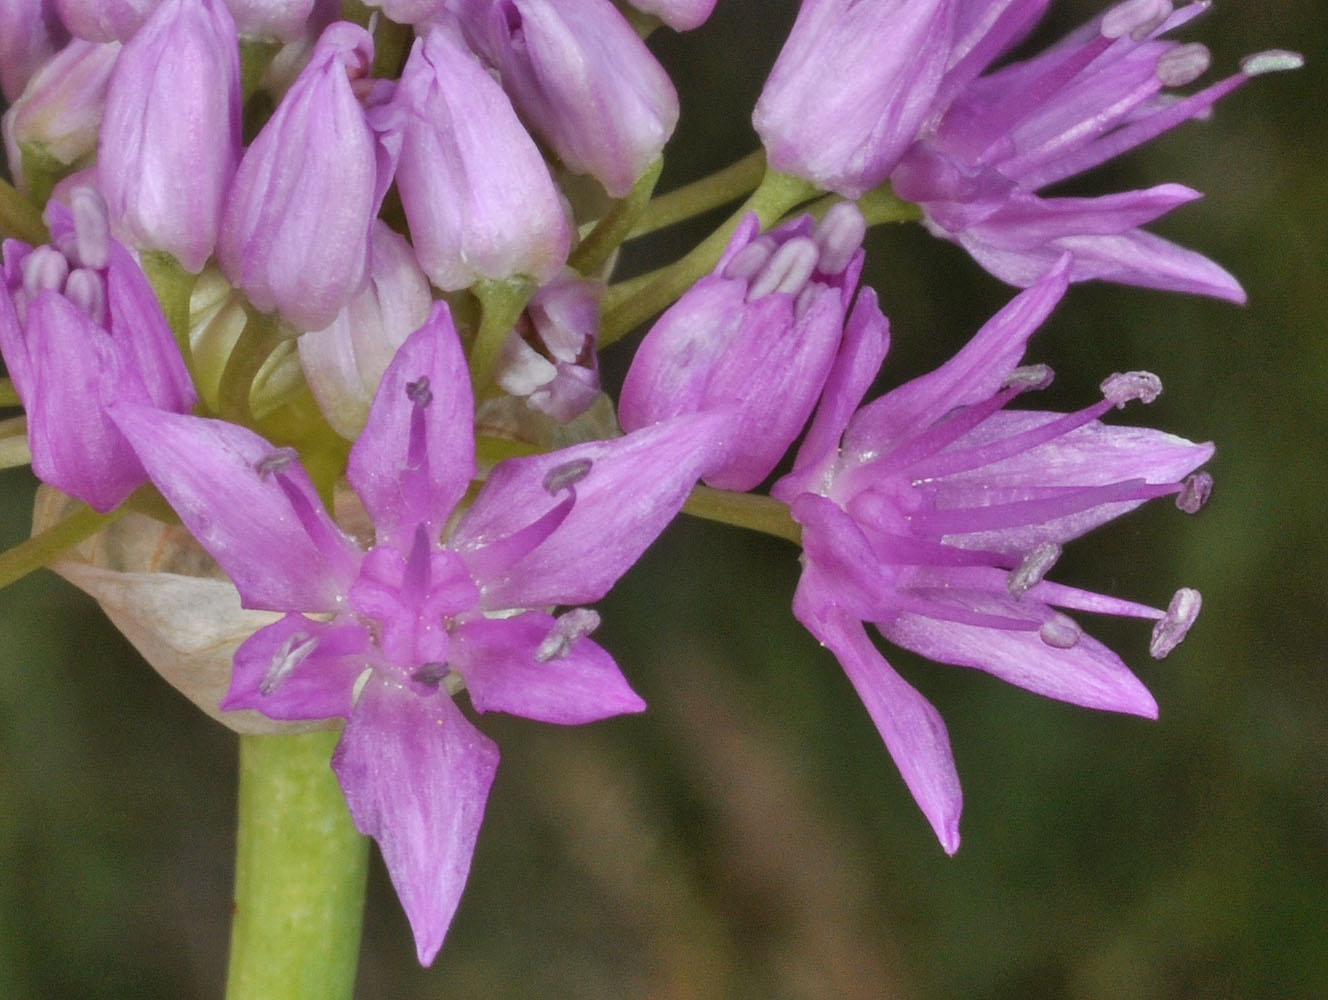 Flora of Eastern Washington Image: Allium columbianum